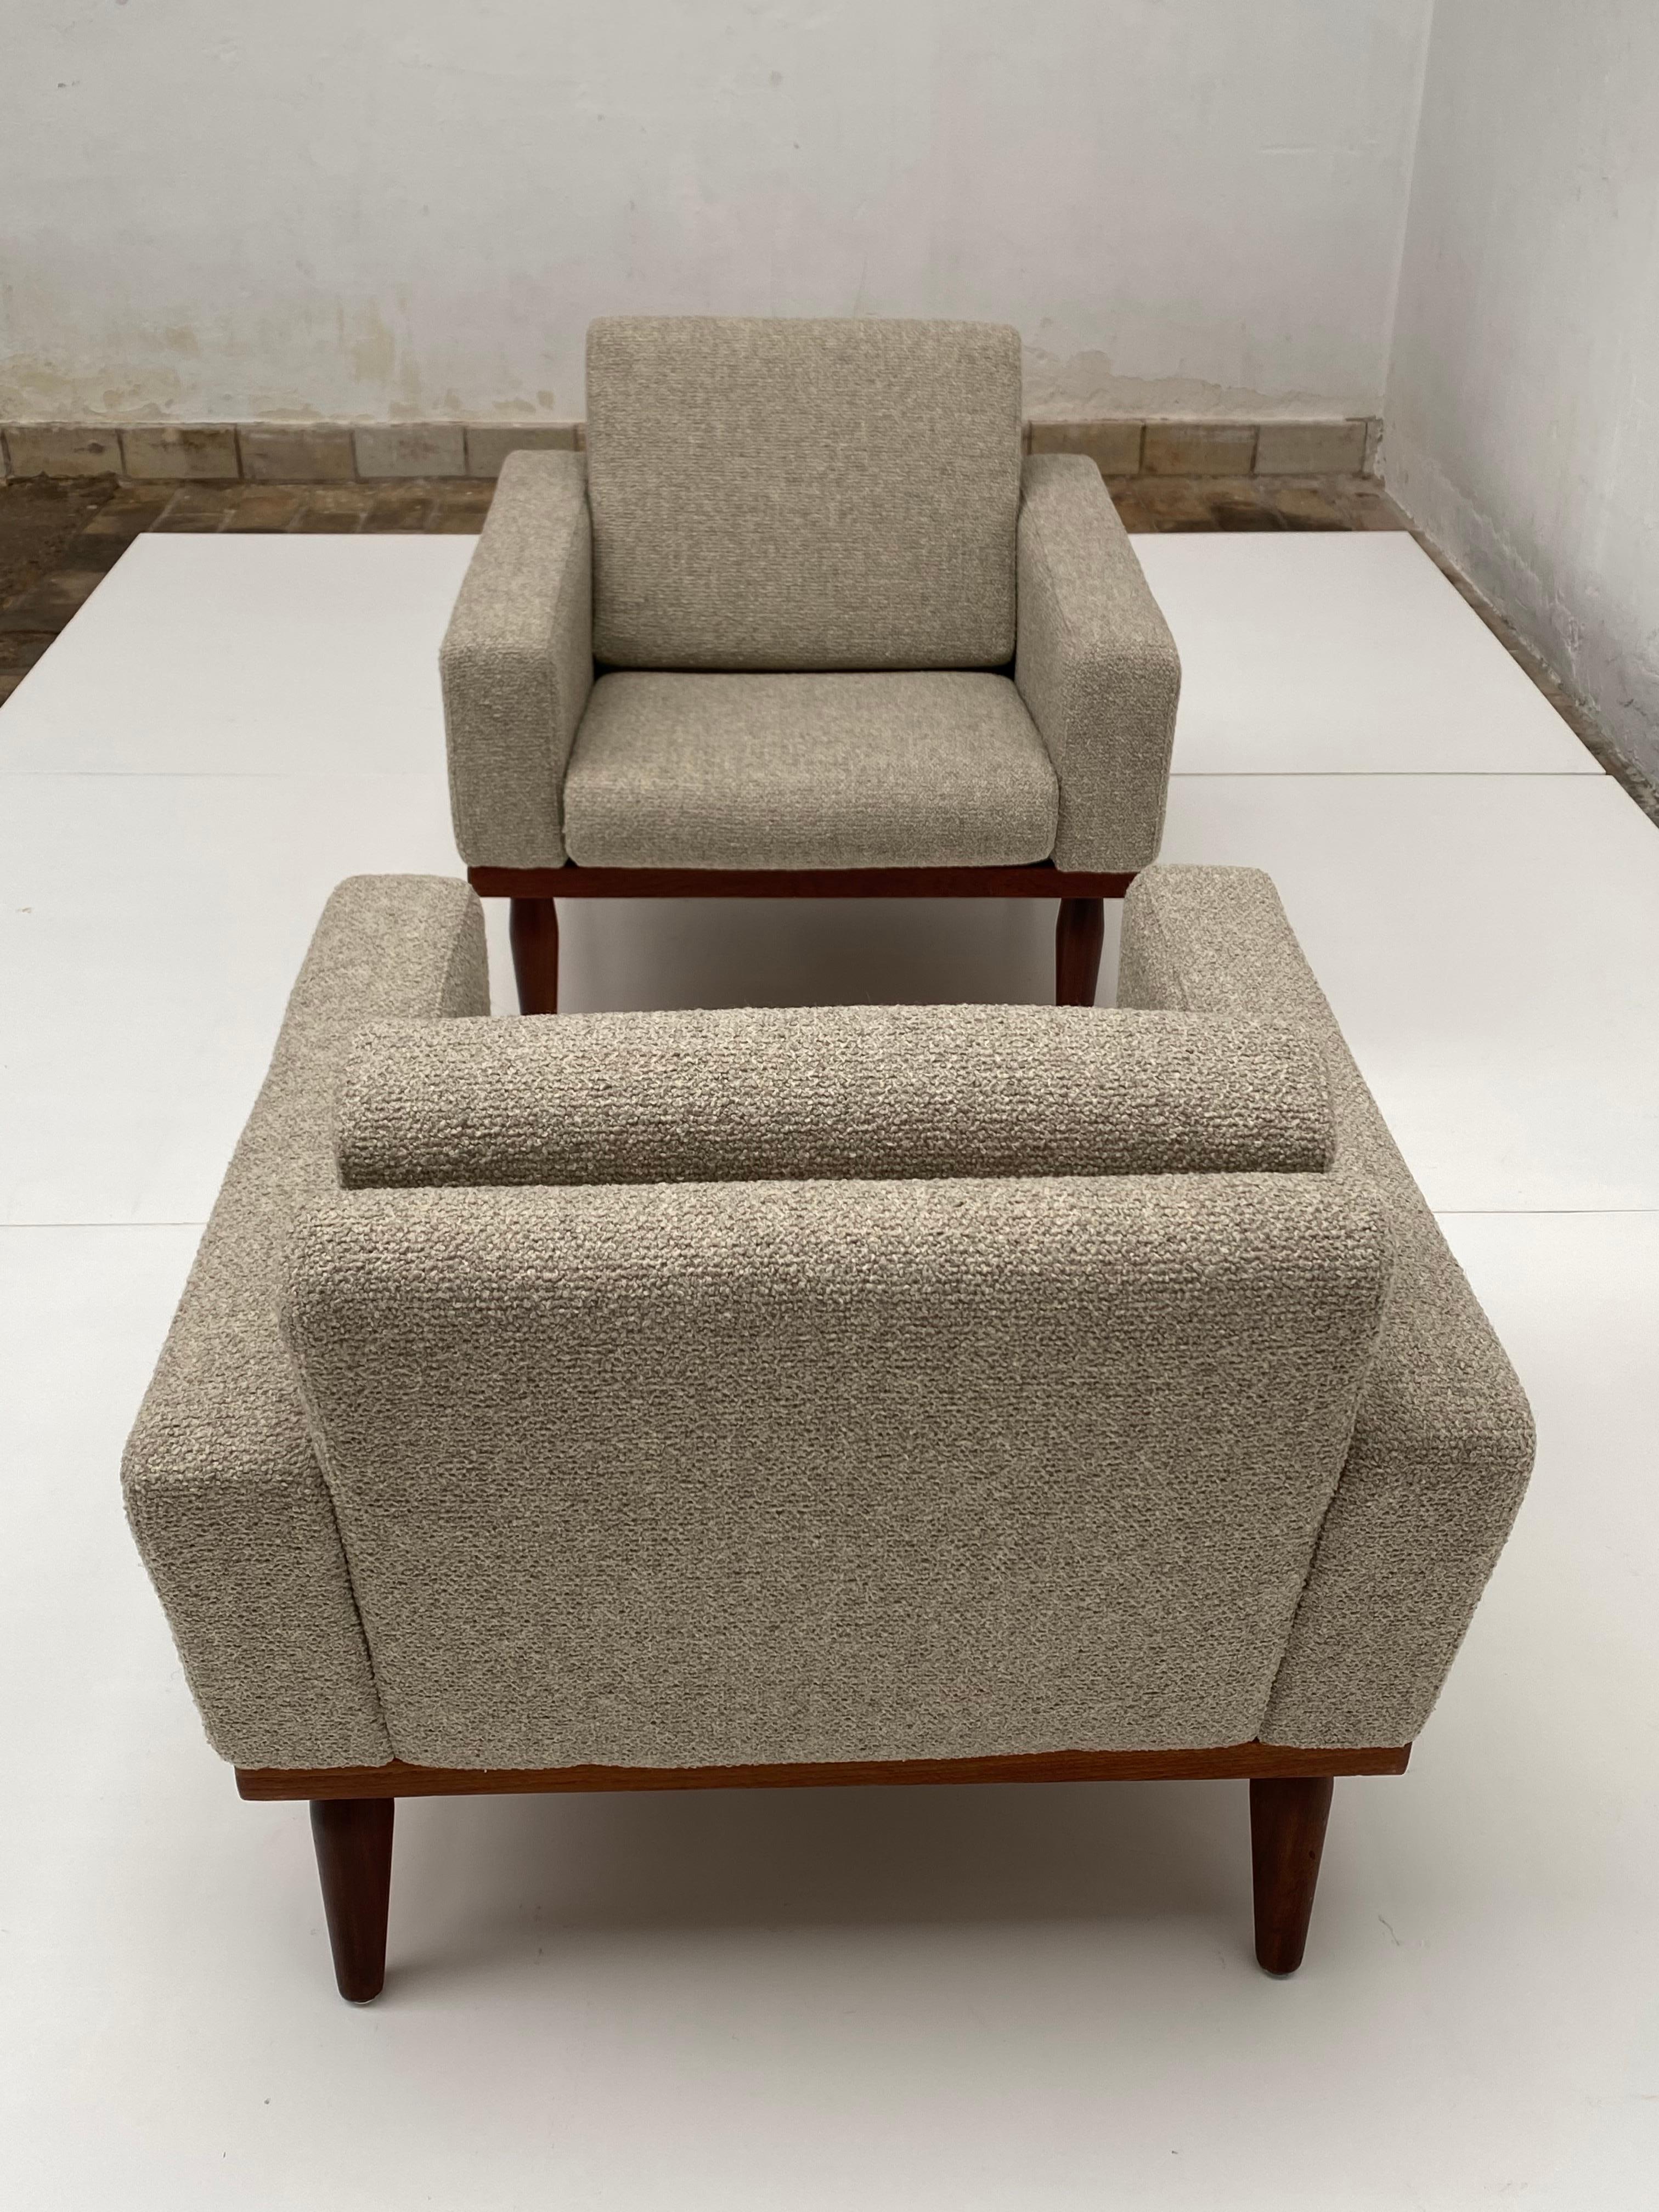 Pair of Danish Teak 1950s Lounge Chairs Bovenkamp The Netherlands New Upholstery For Sale 5